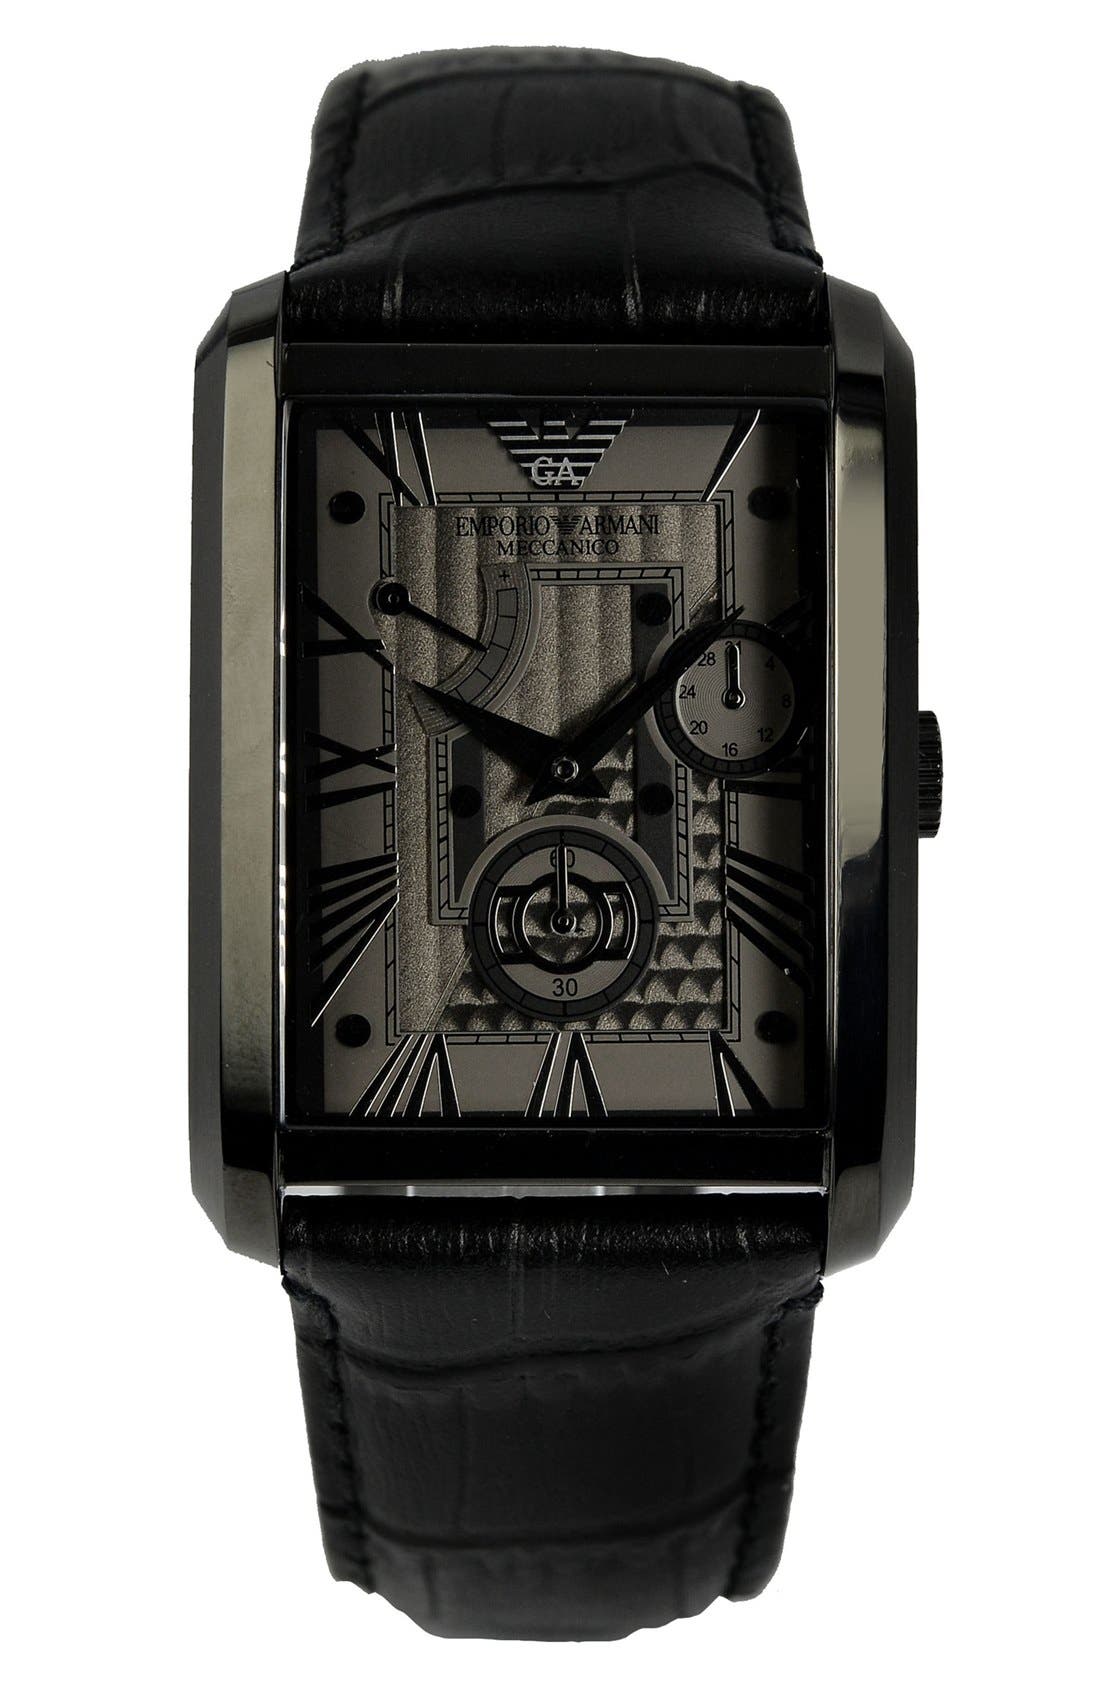 rectangular armani watch